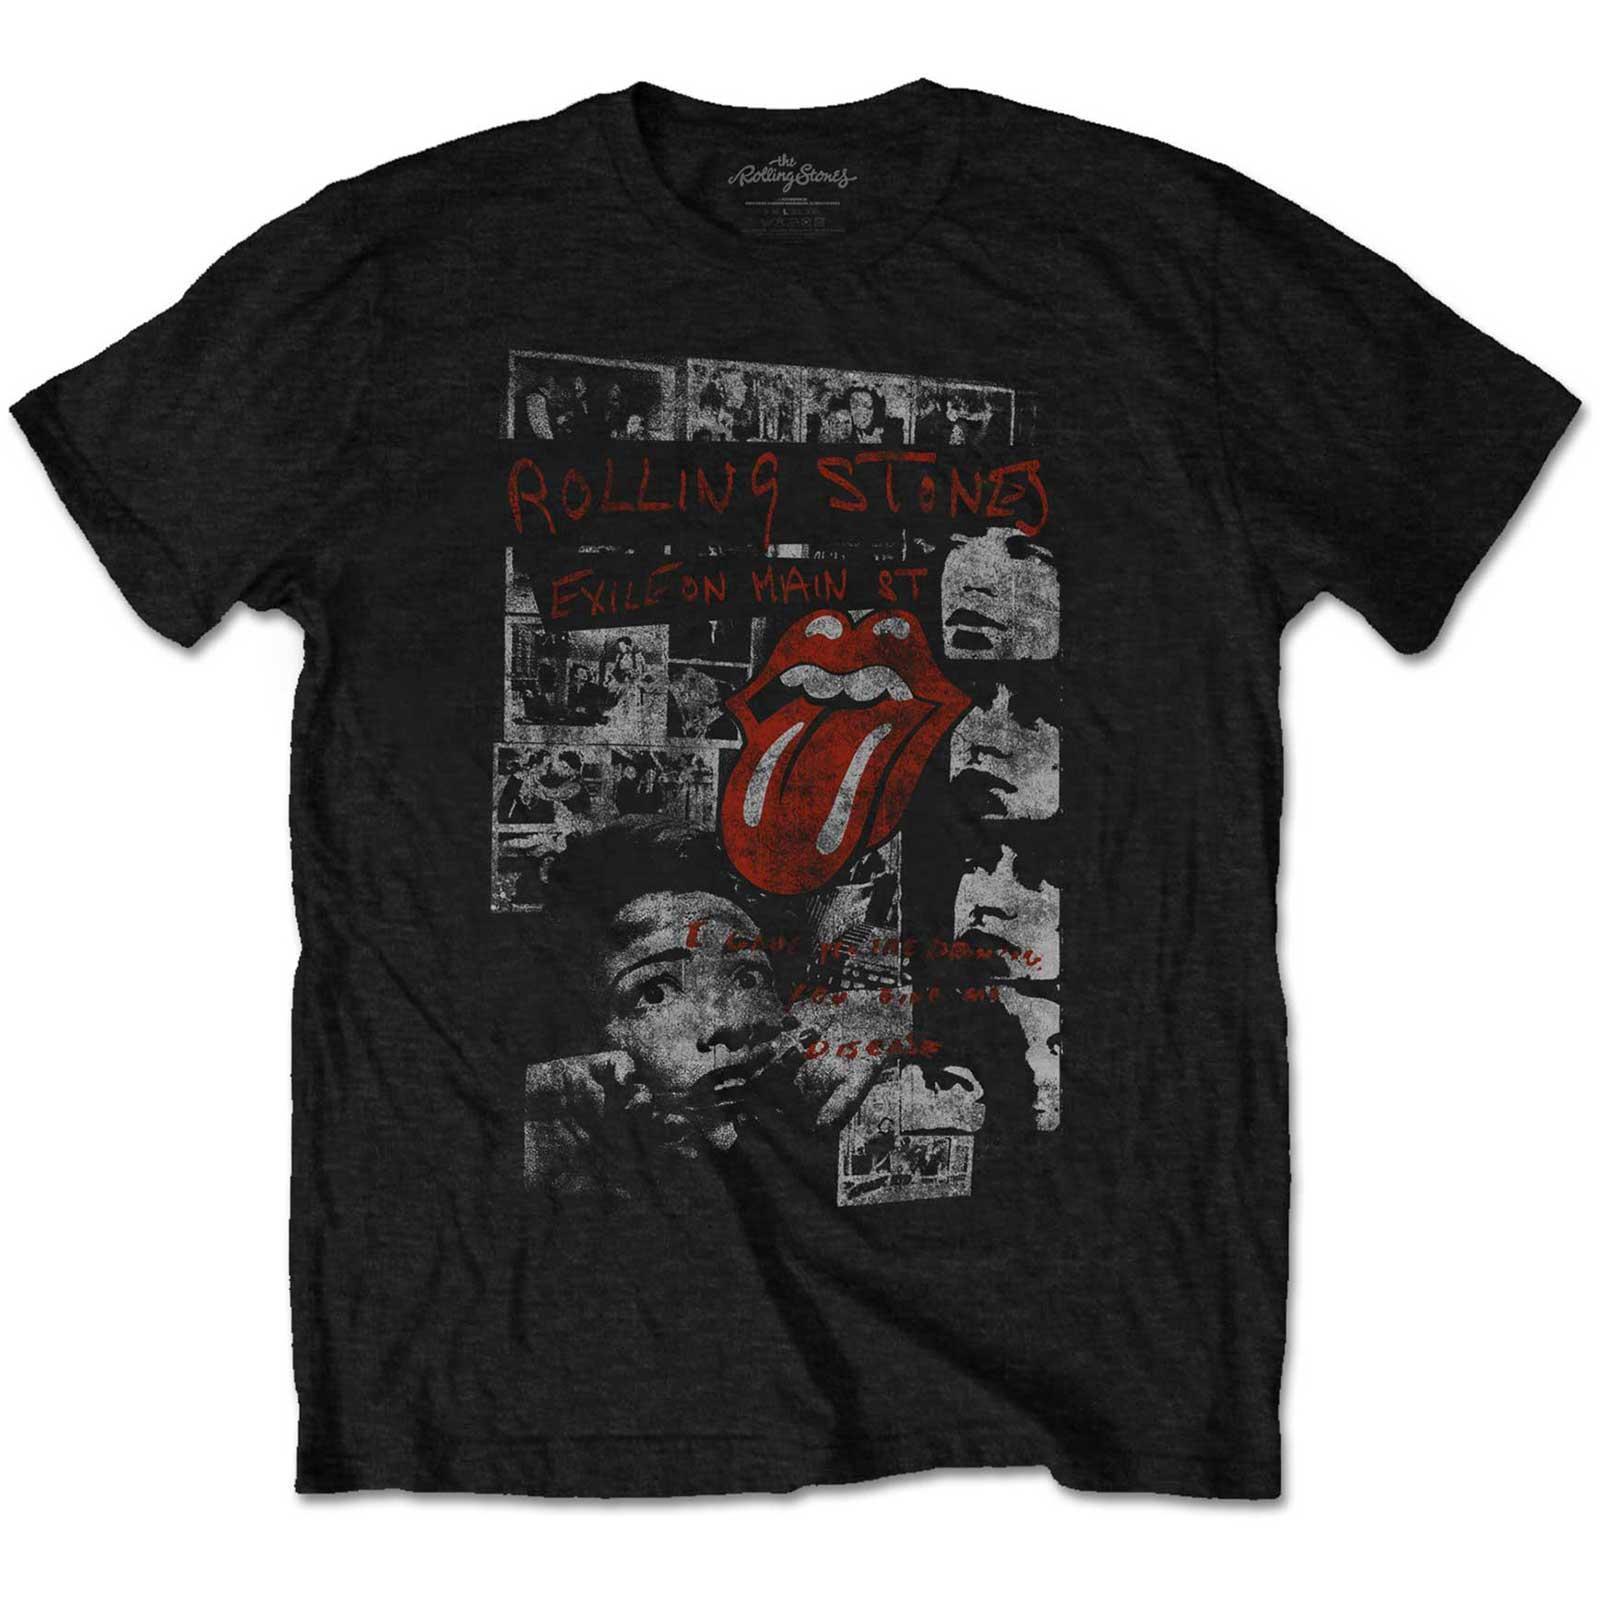 The Rolling Stones Unisex Adult Elite Faded Cotton T-Shirt (Black) (L)